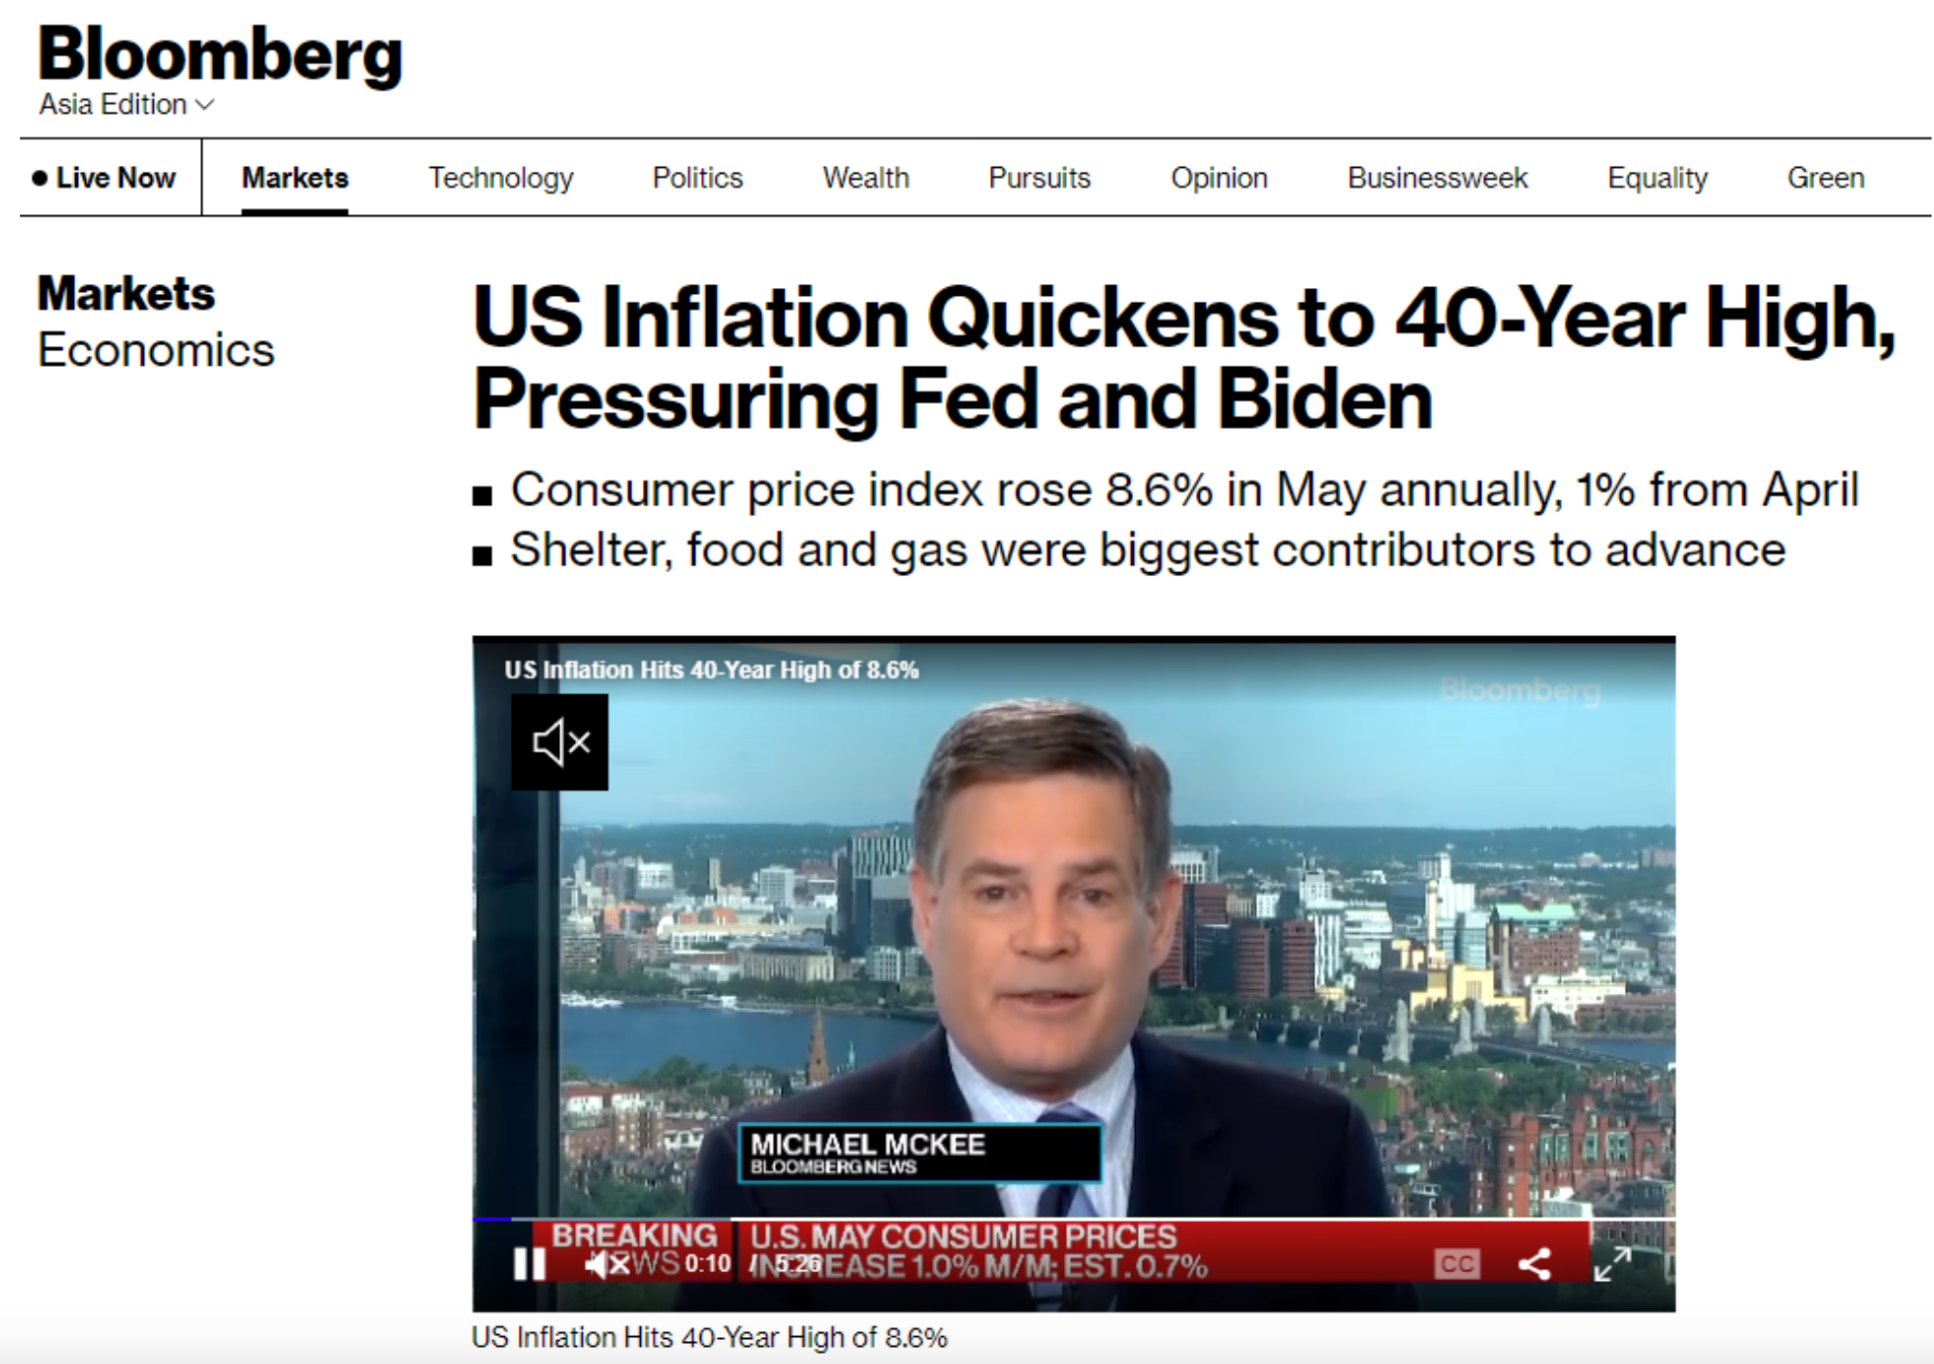 U.S. Inflation Hits 40-Year High